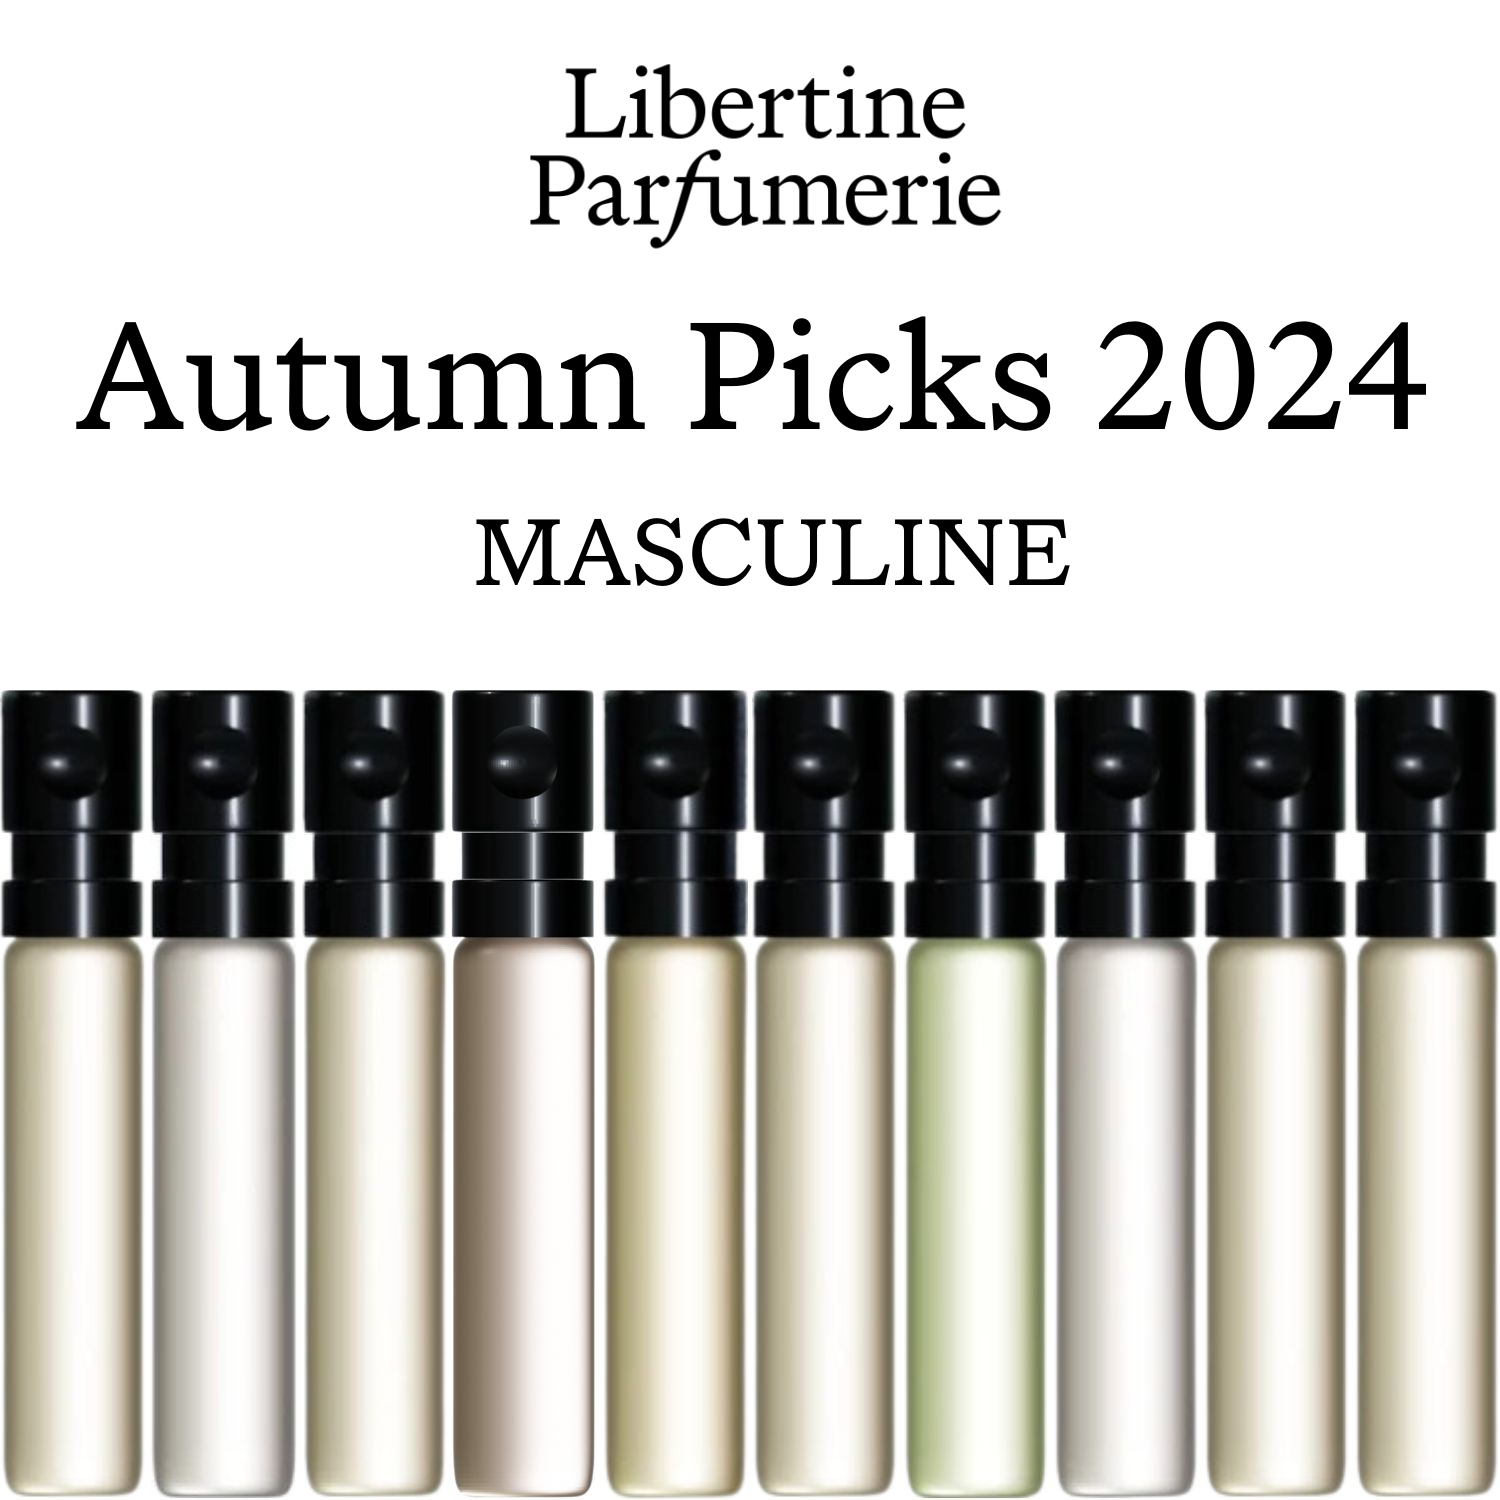 Top 10 Autumn Picks 2024 - Masculine